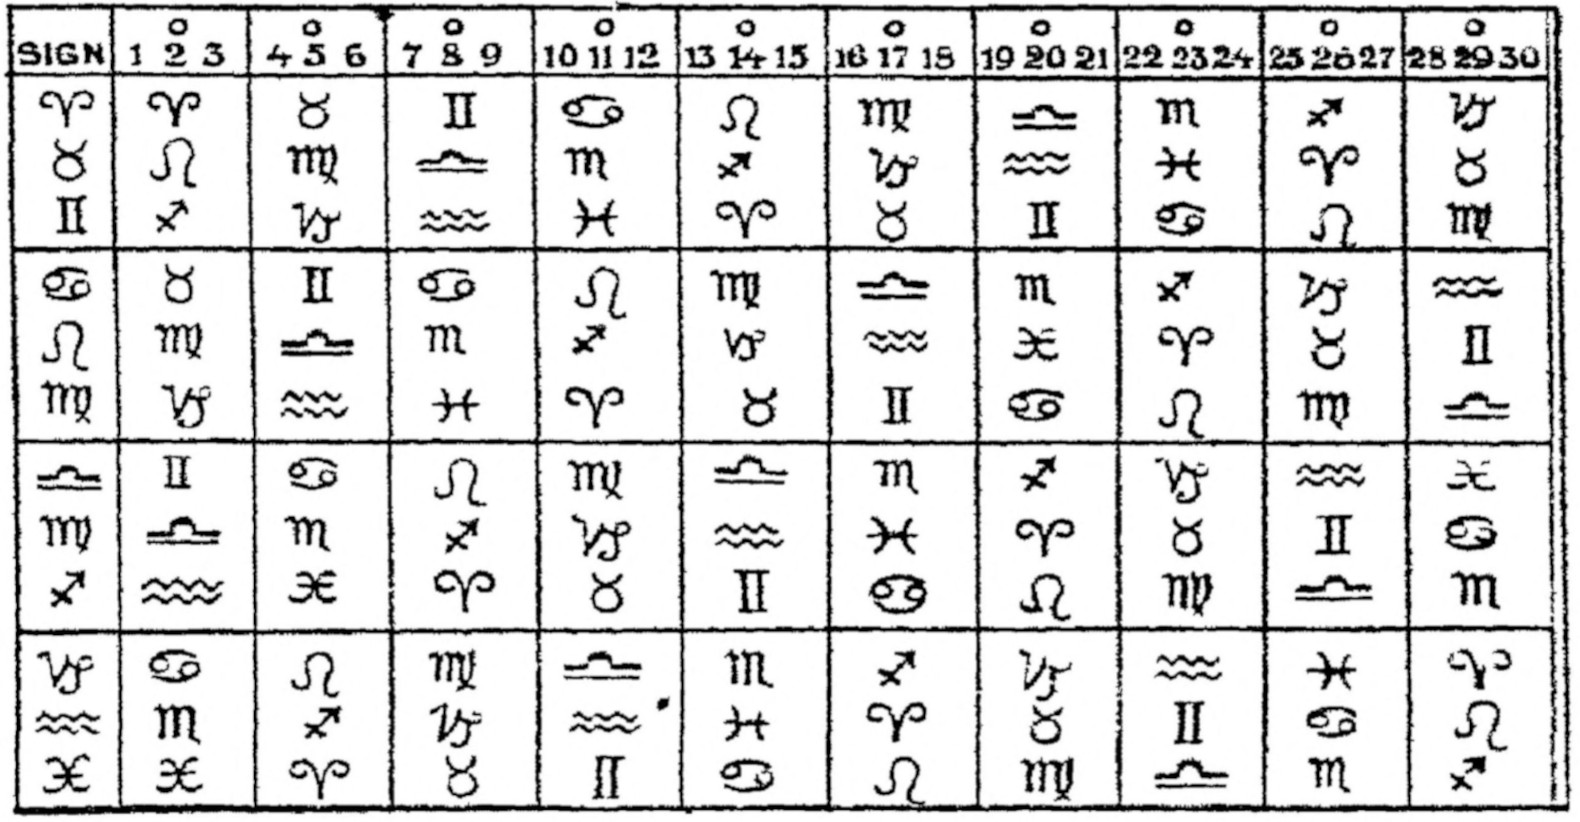 Figure 21. Table of Das’amshas.